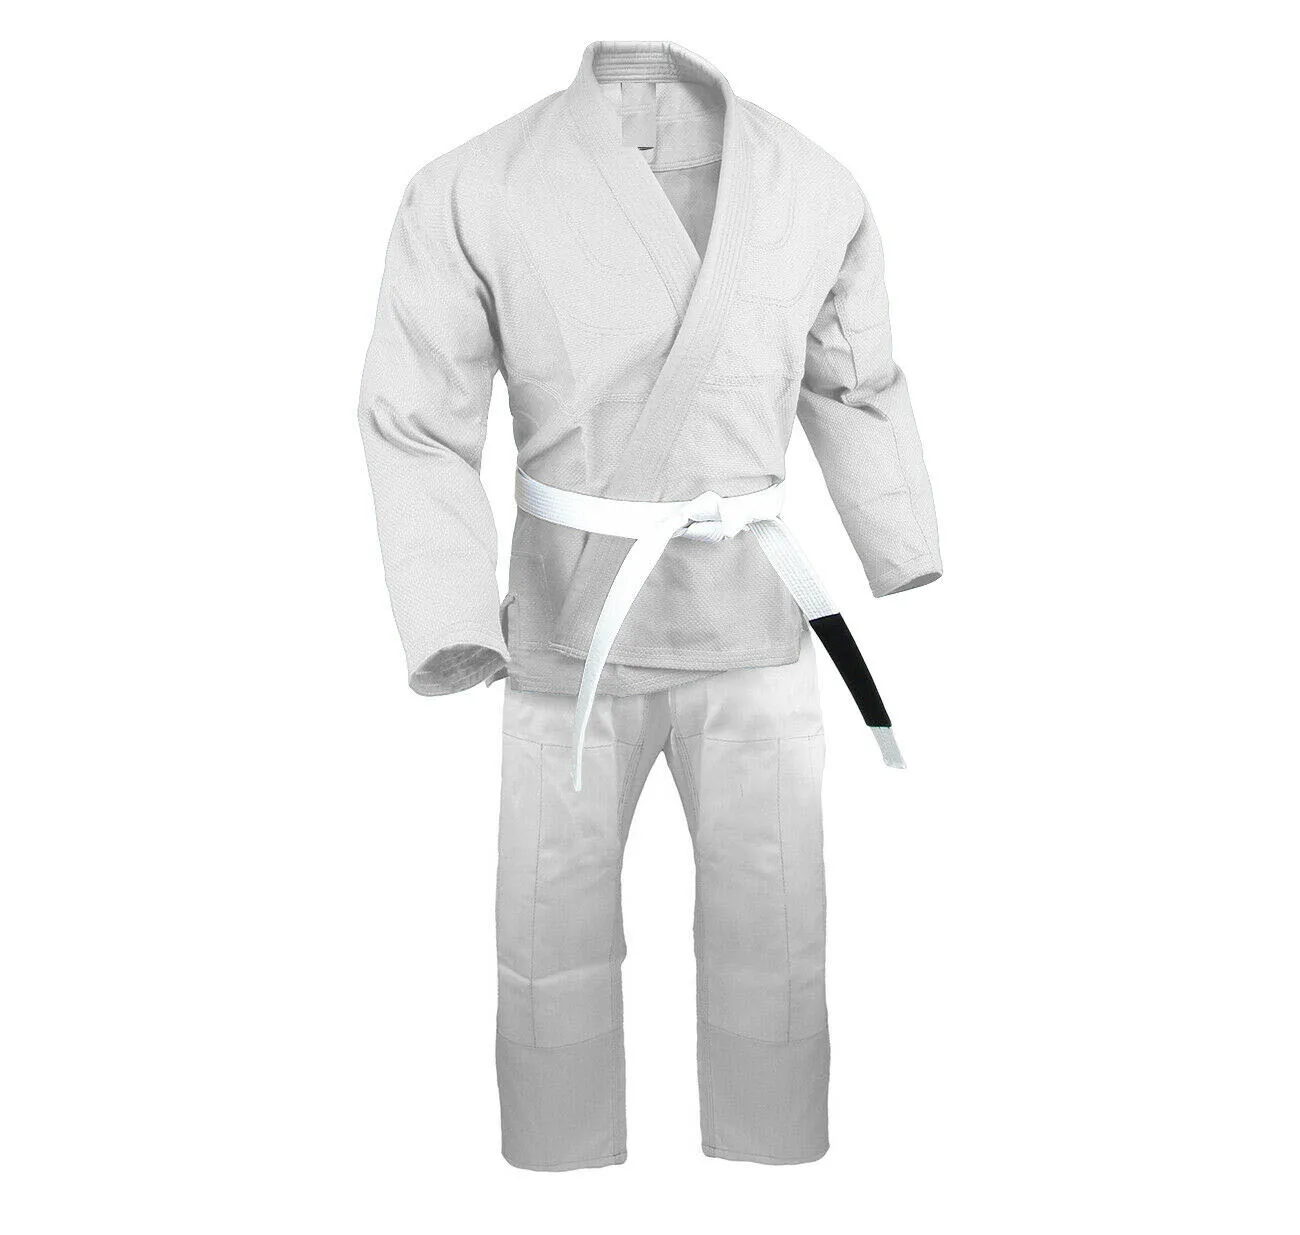 BJJ Gi Kimono 100% Preshrunk Cotton Traditional Jiu Jitsu Uniform w/ White Belt 